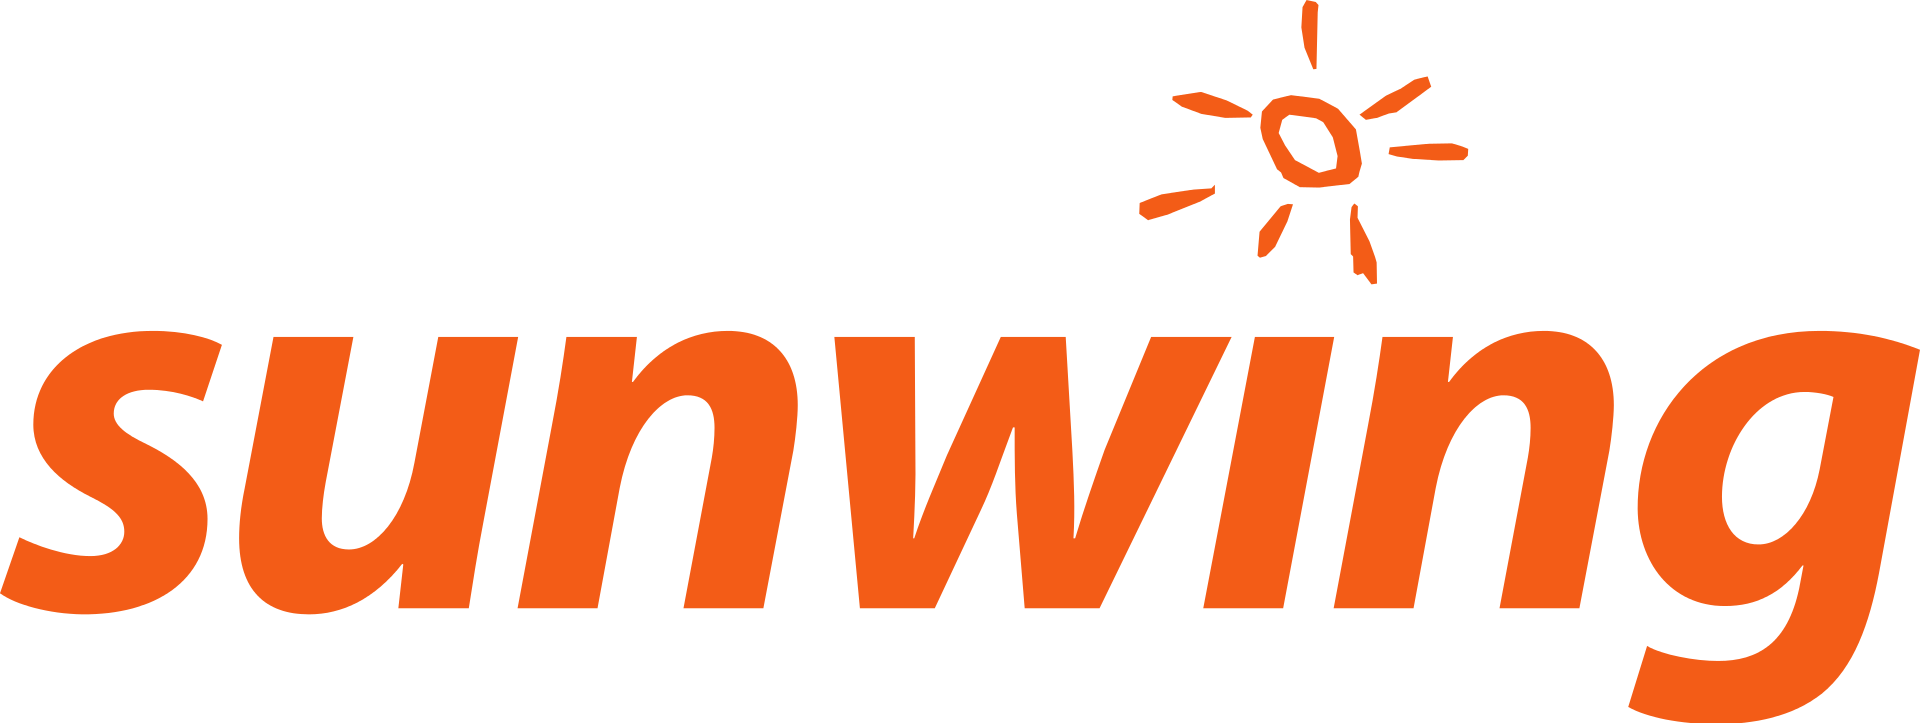 SWG logo